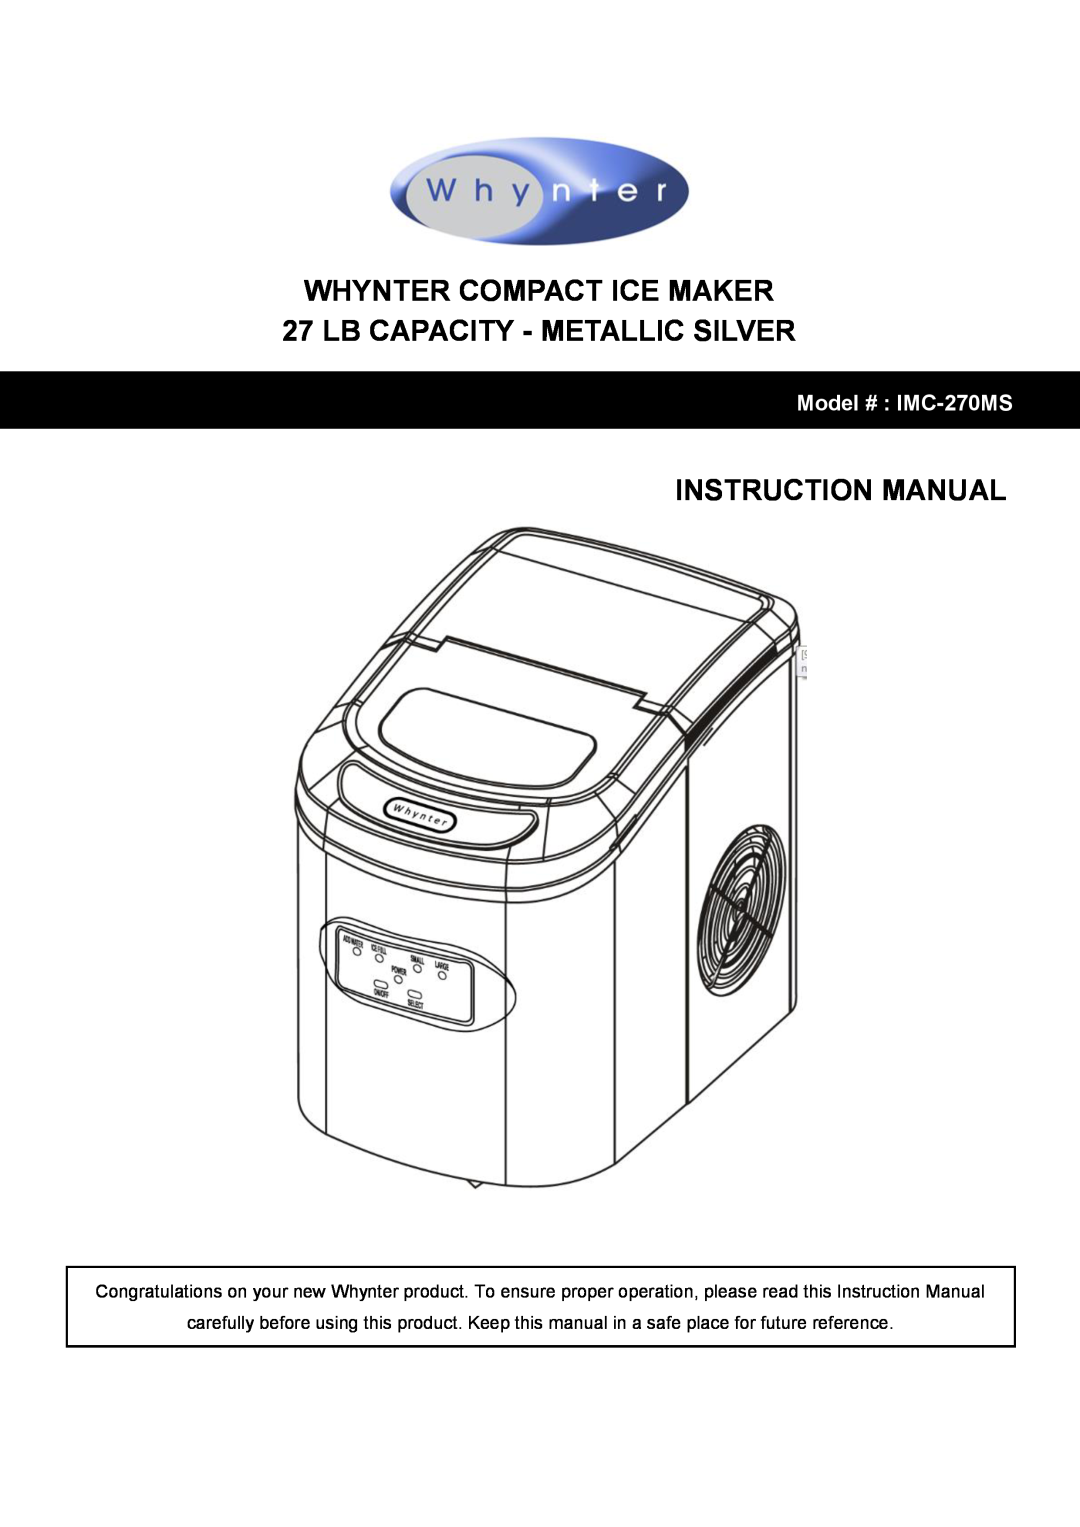 Whynter instruction manual Model # IMC-270MS 